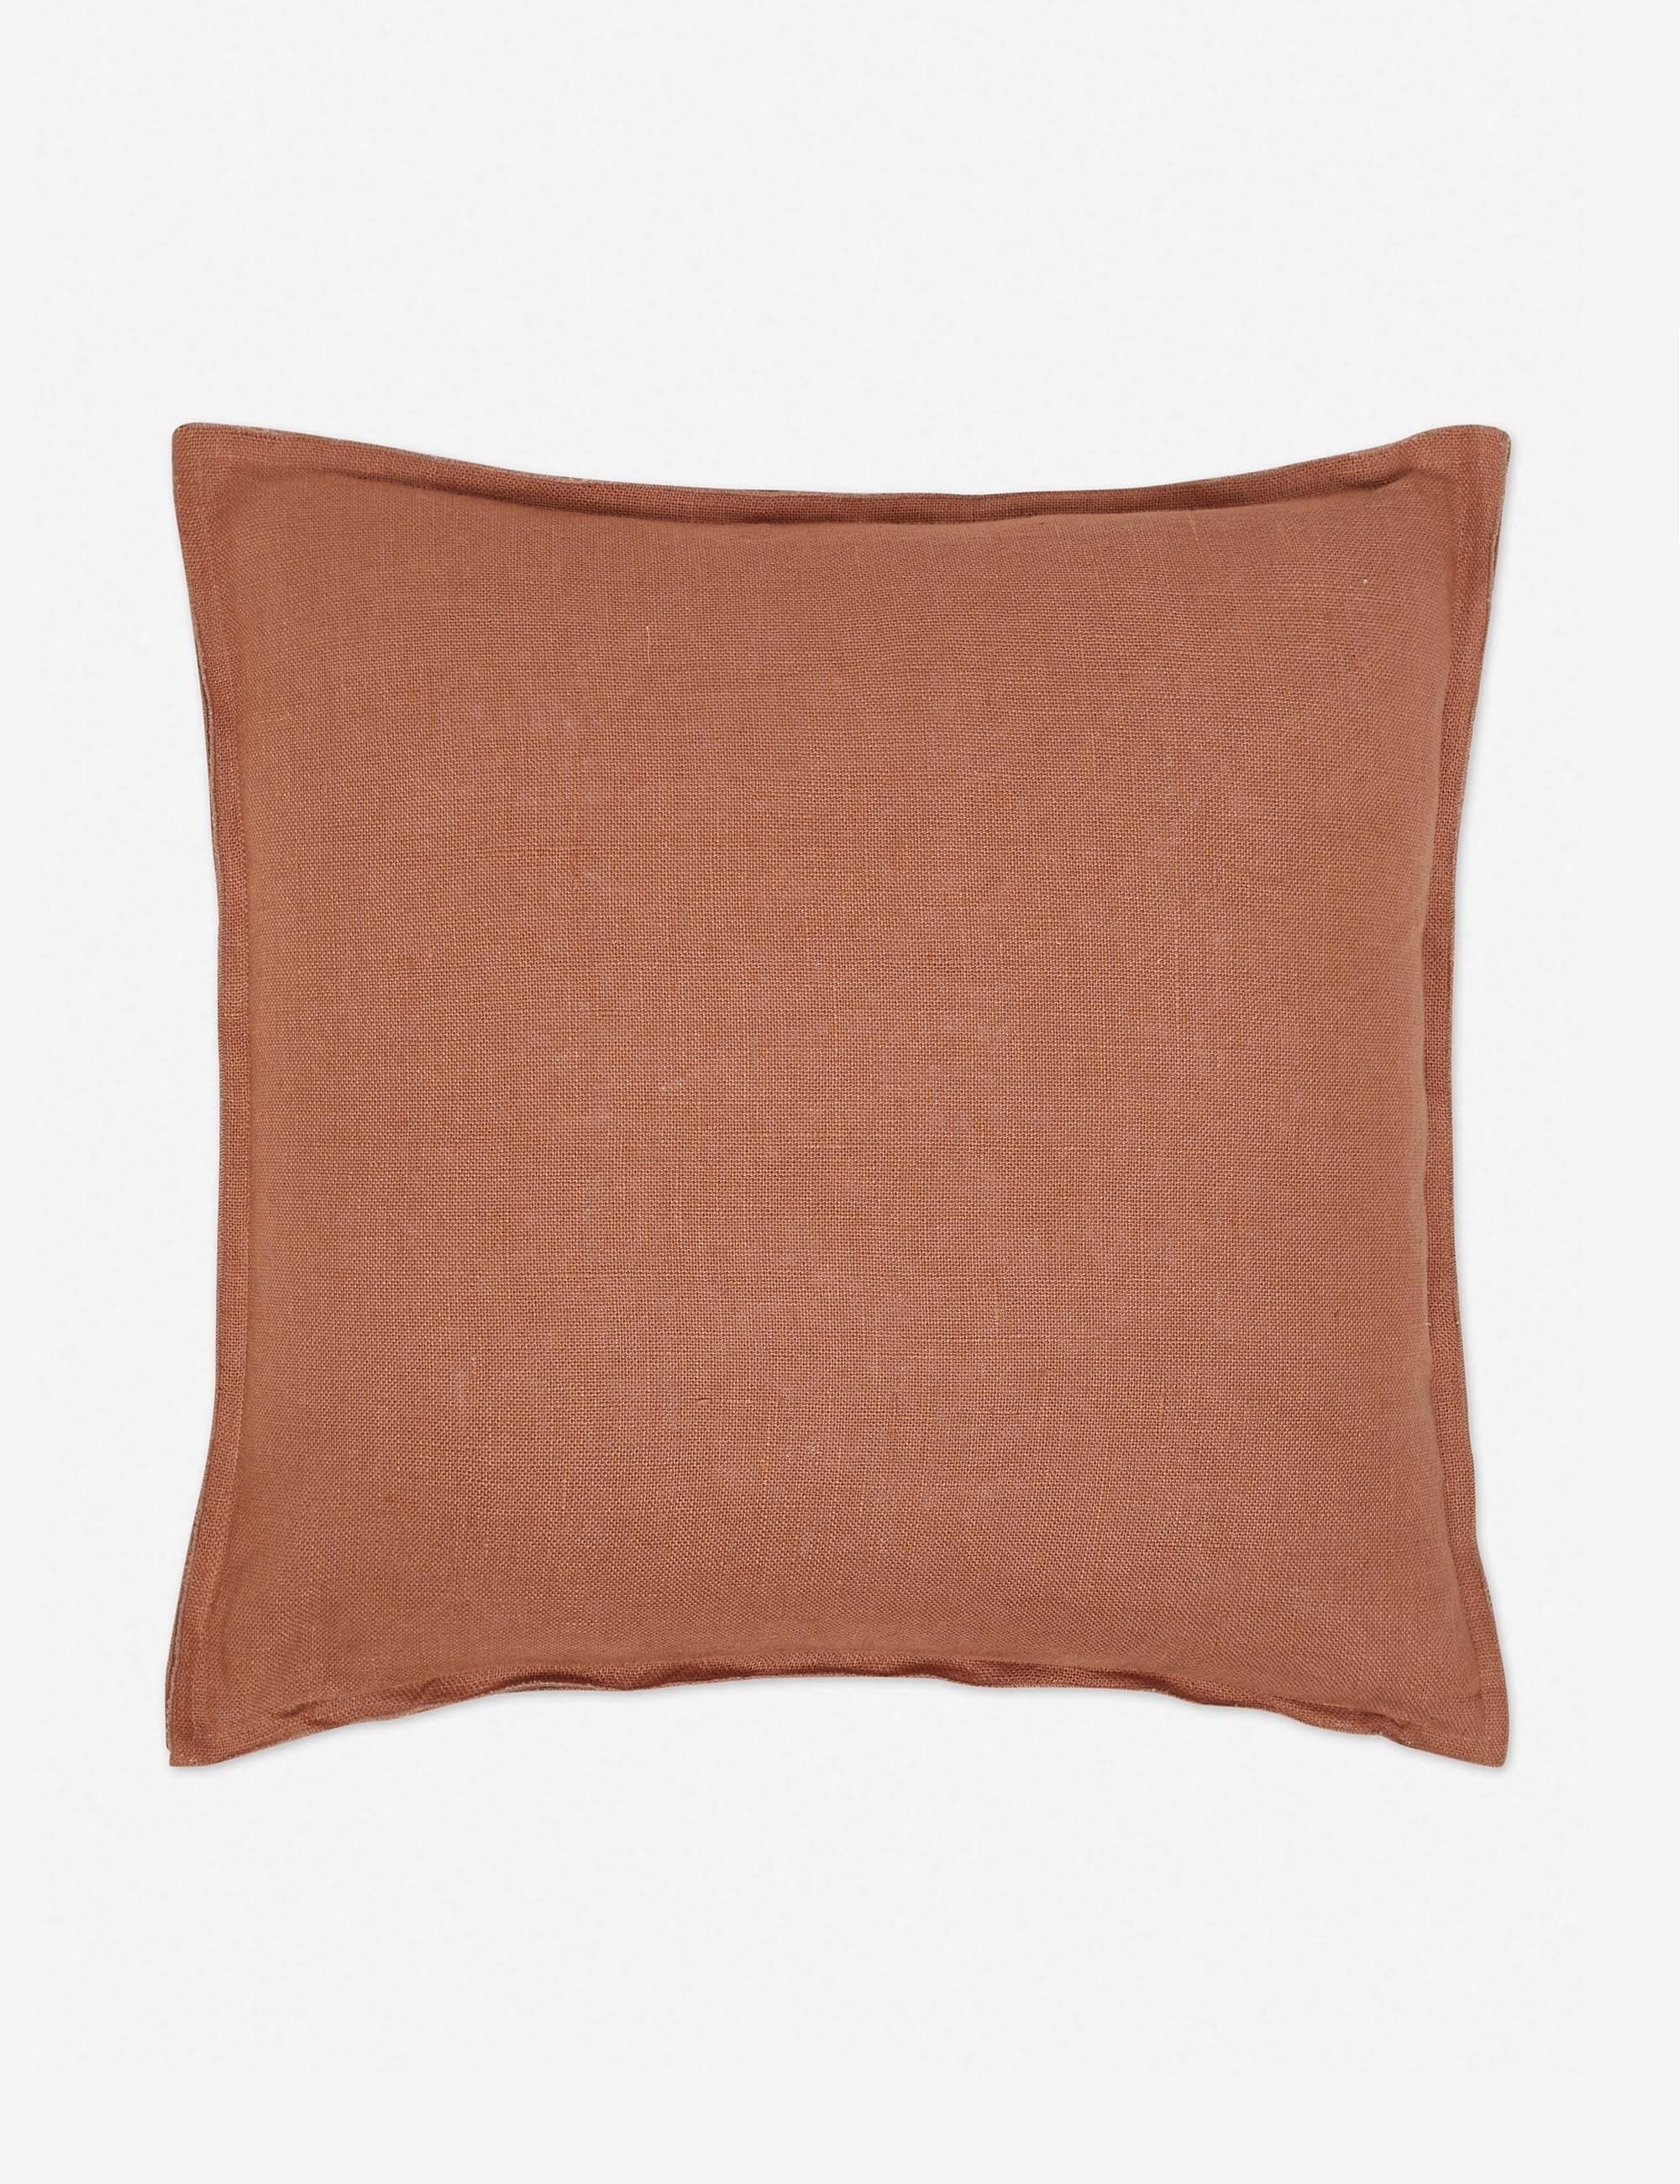 20" Arlo Linen Pillow, Rust - Image 2